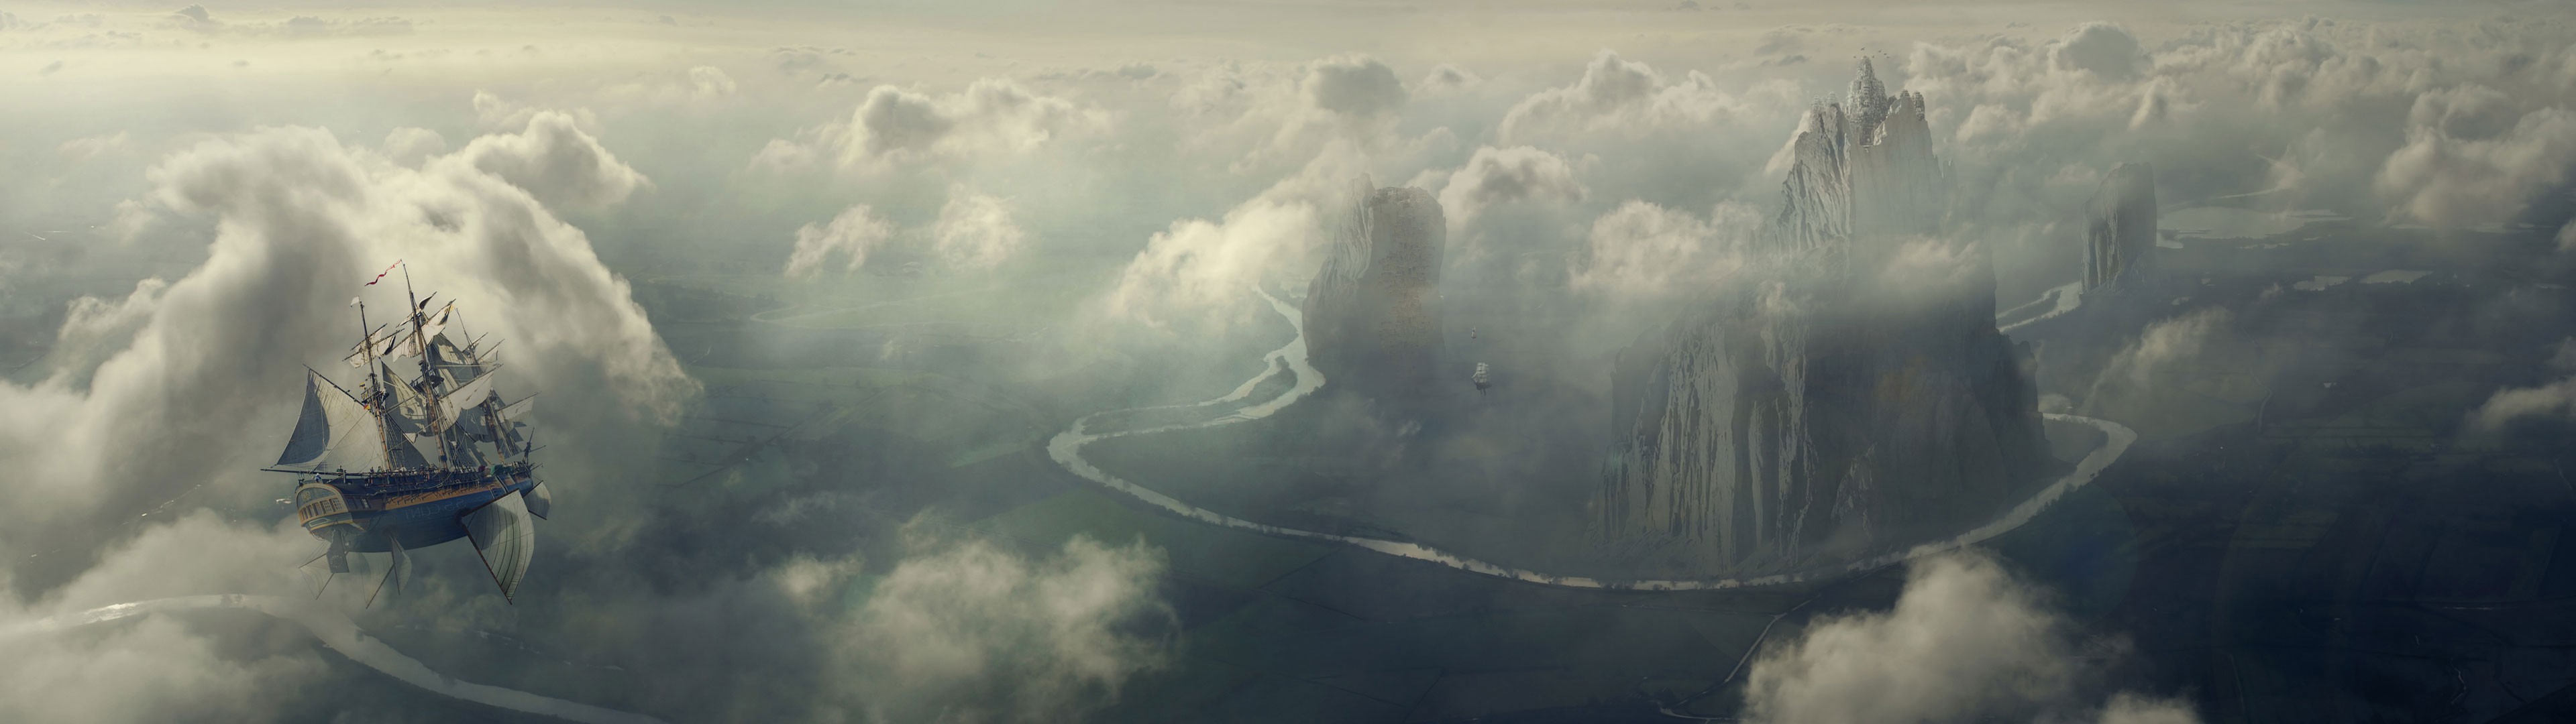 airships, Digital Art, Artwork, Fantasy Art, Clouds, Landscape Wallpaper